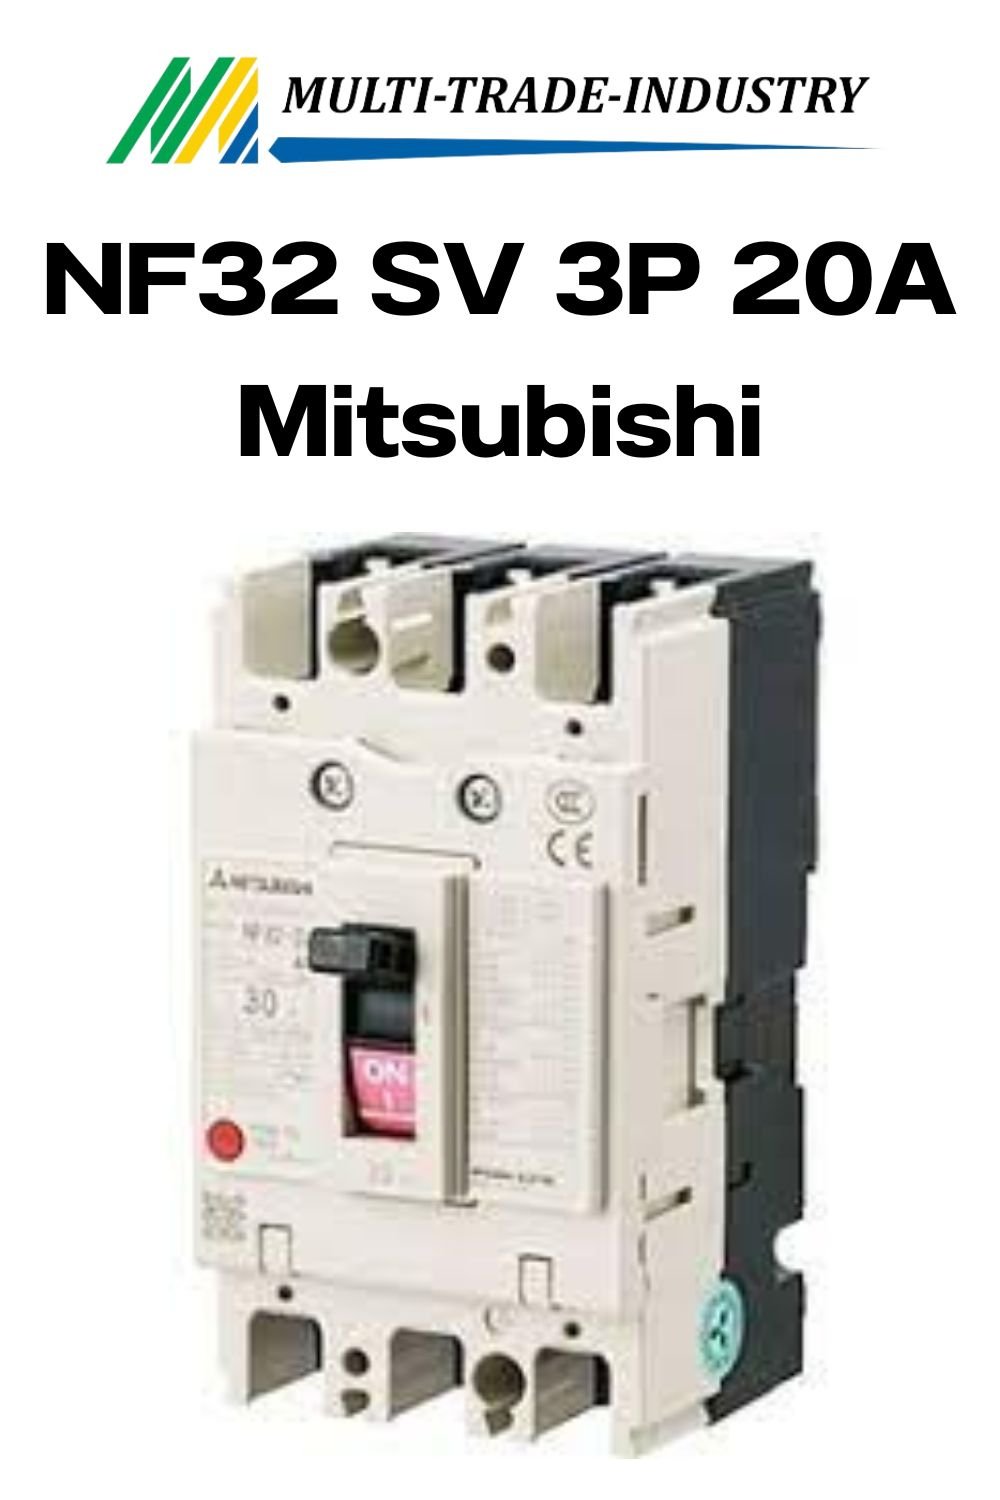 NF32 SV 3P 20A Mitsubishi